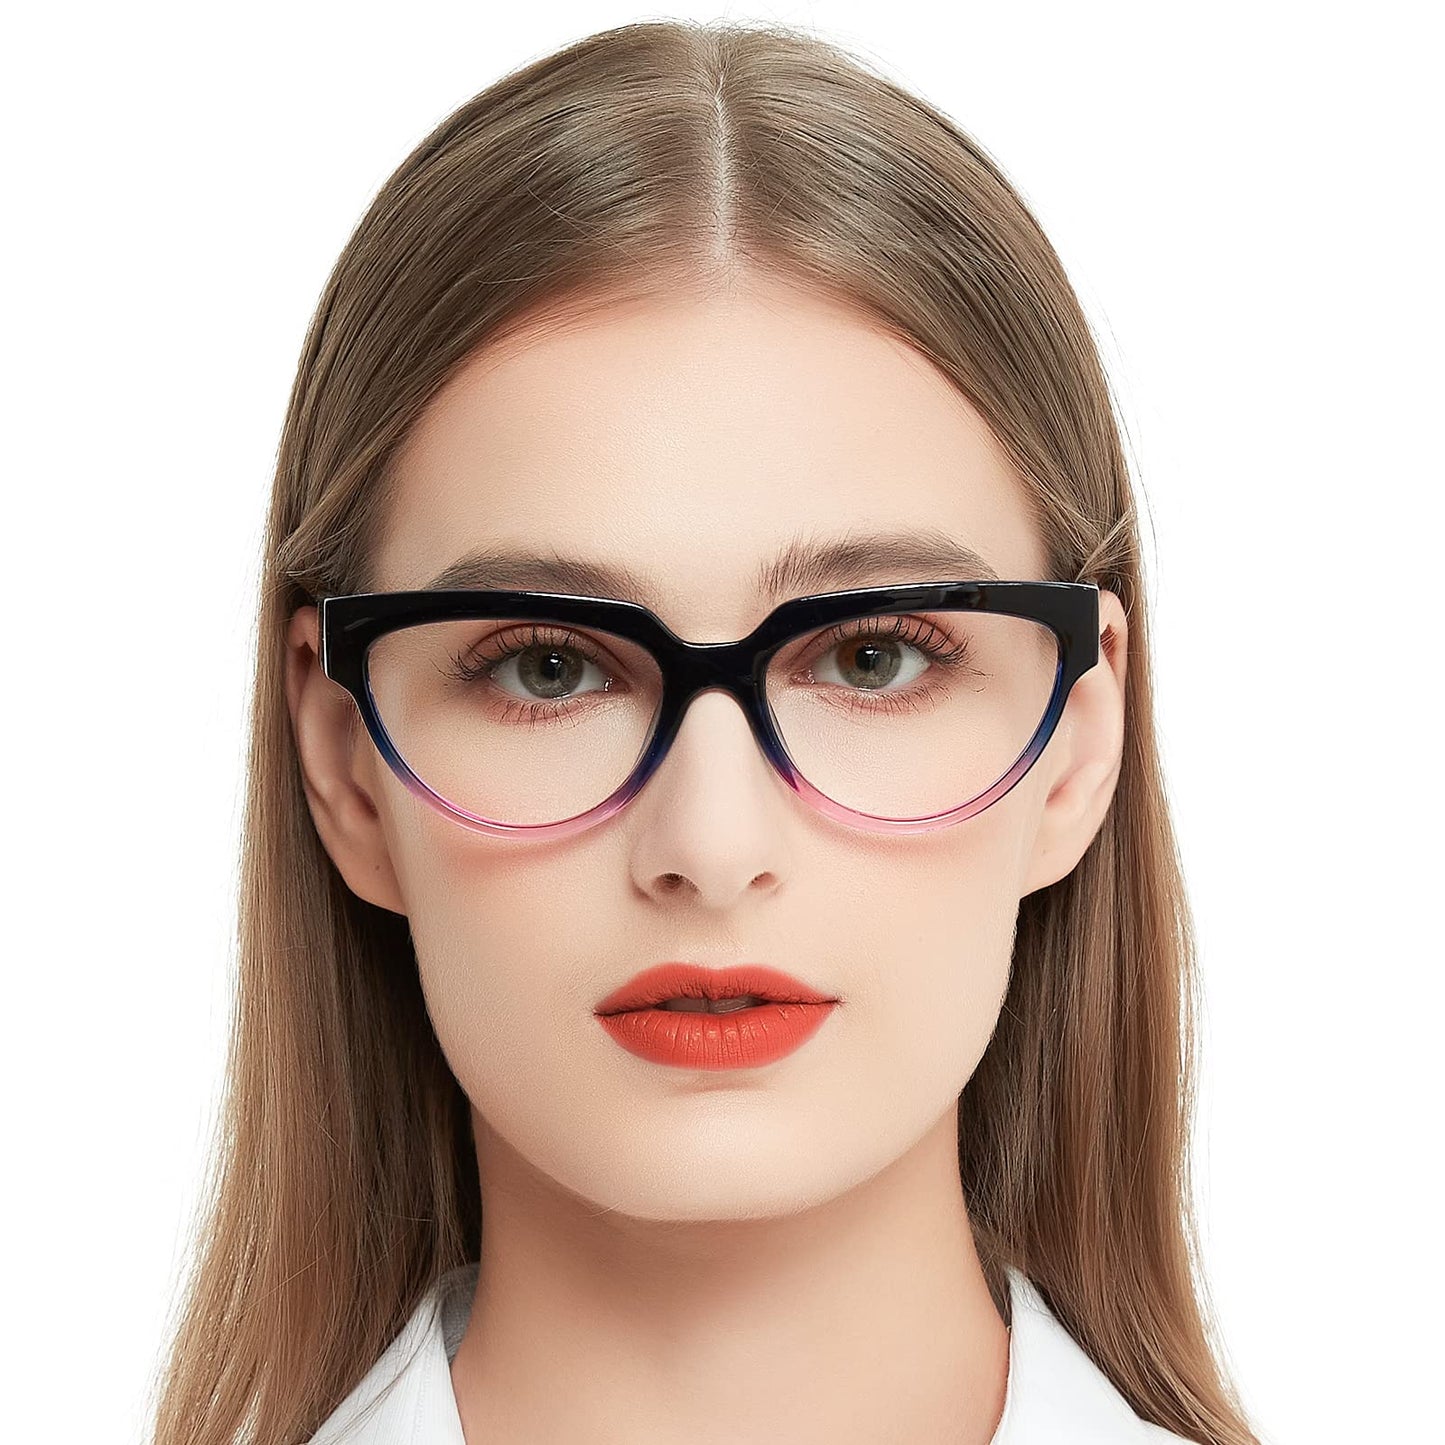 OCCI CHIARI Large Reading Glasses for Women Cateye Readers Large Frame(1.0 1.5 2.0 2.5 3.0 3.5 4.0 5.0 6.0)